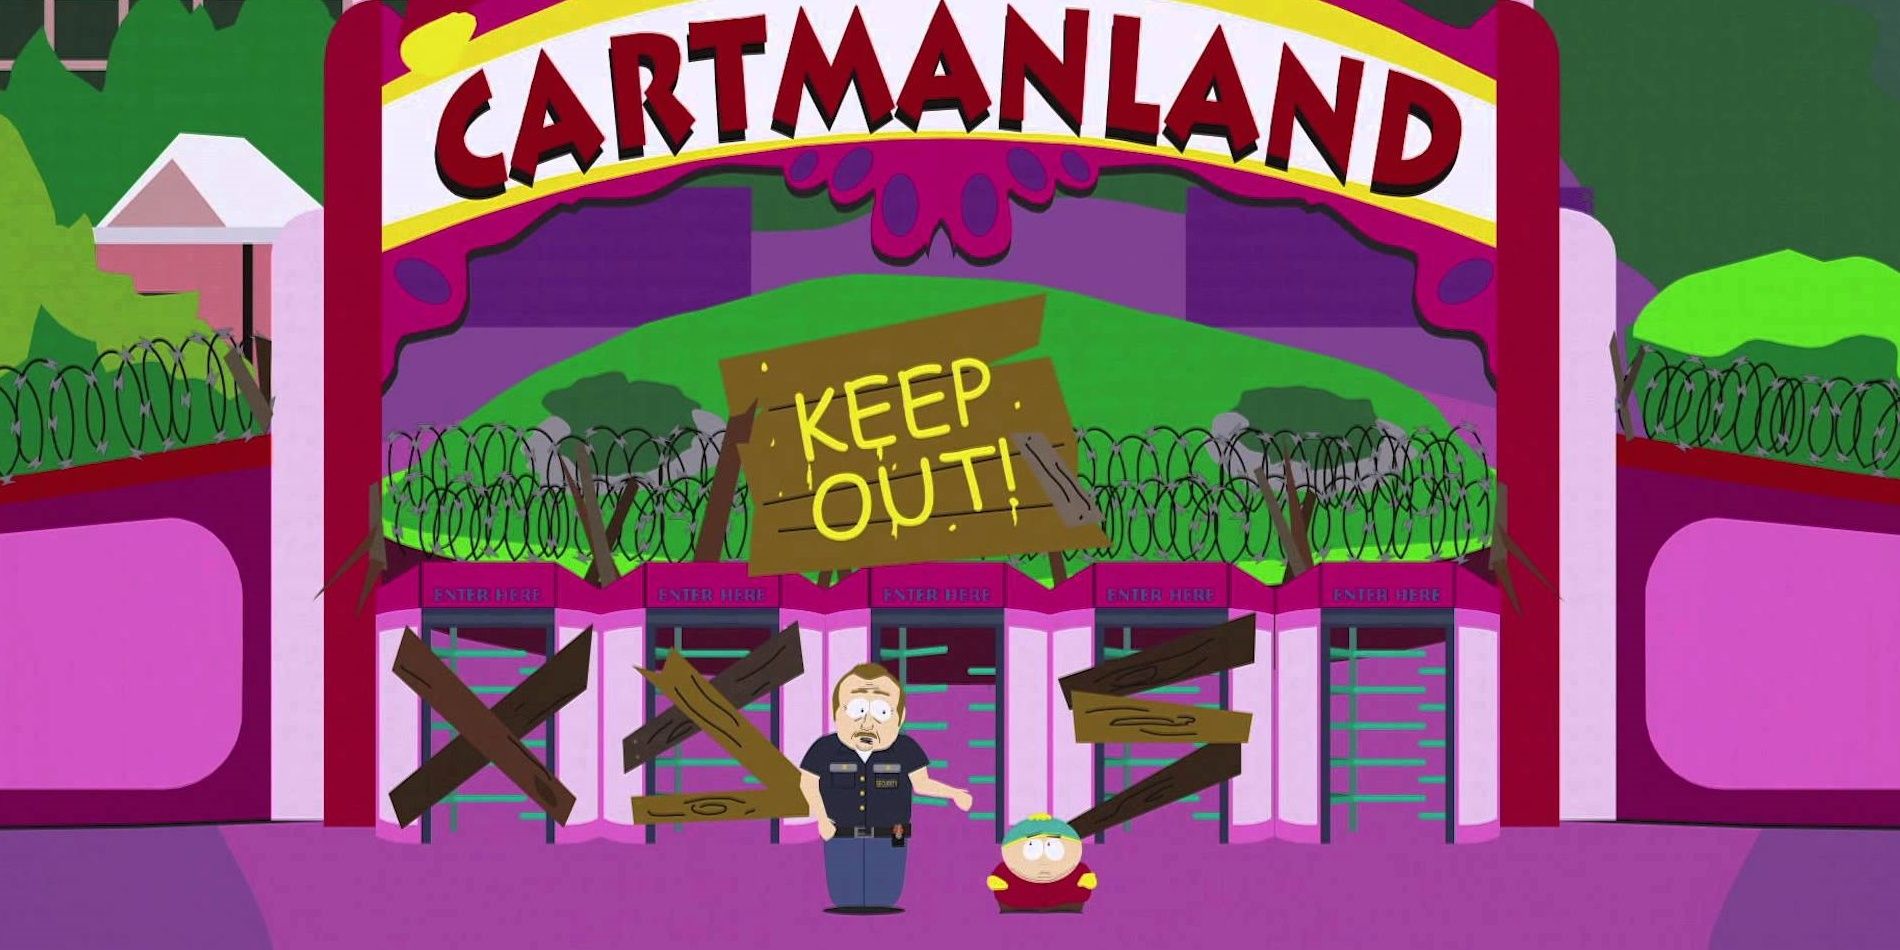 Cartmanland, a South Park episode